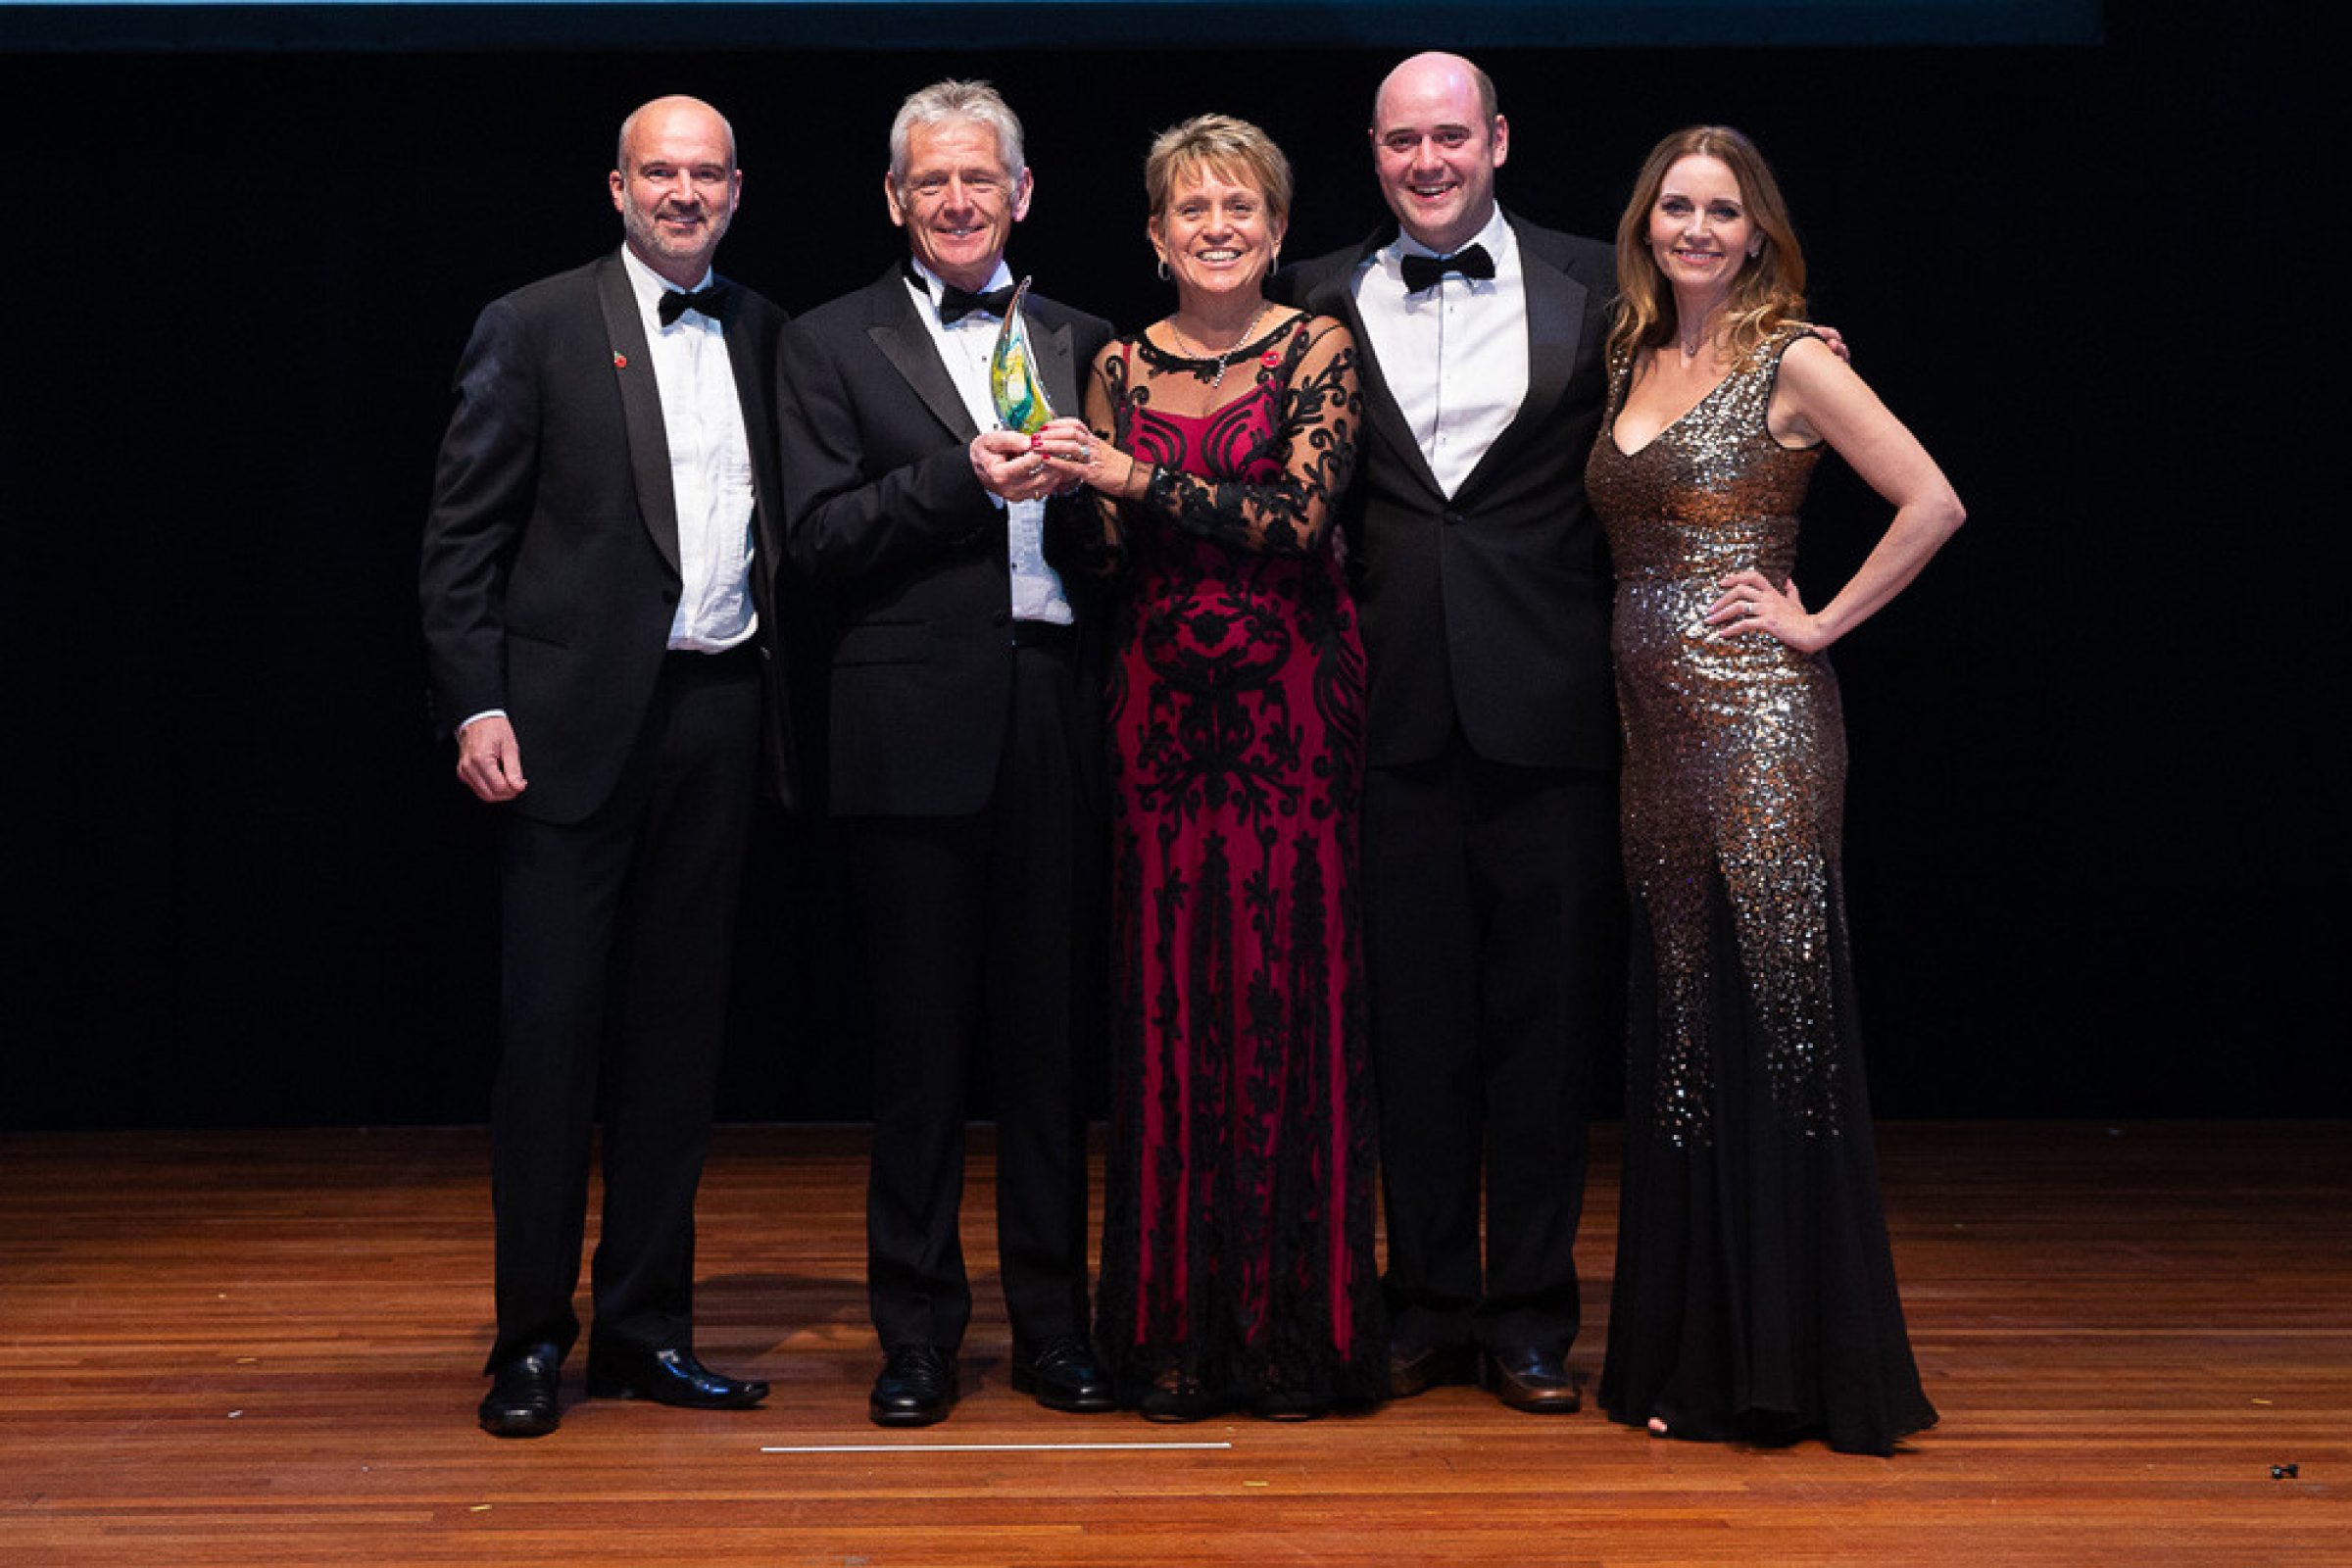 Jo and David Bridgen dorset tourism awards